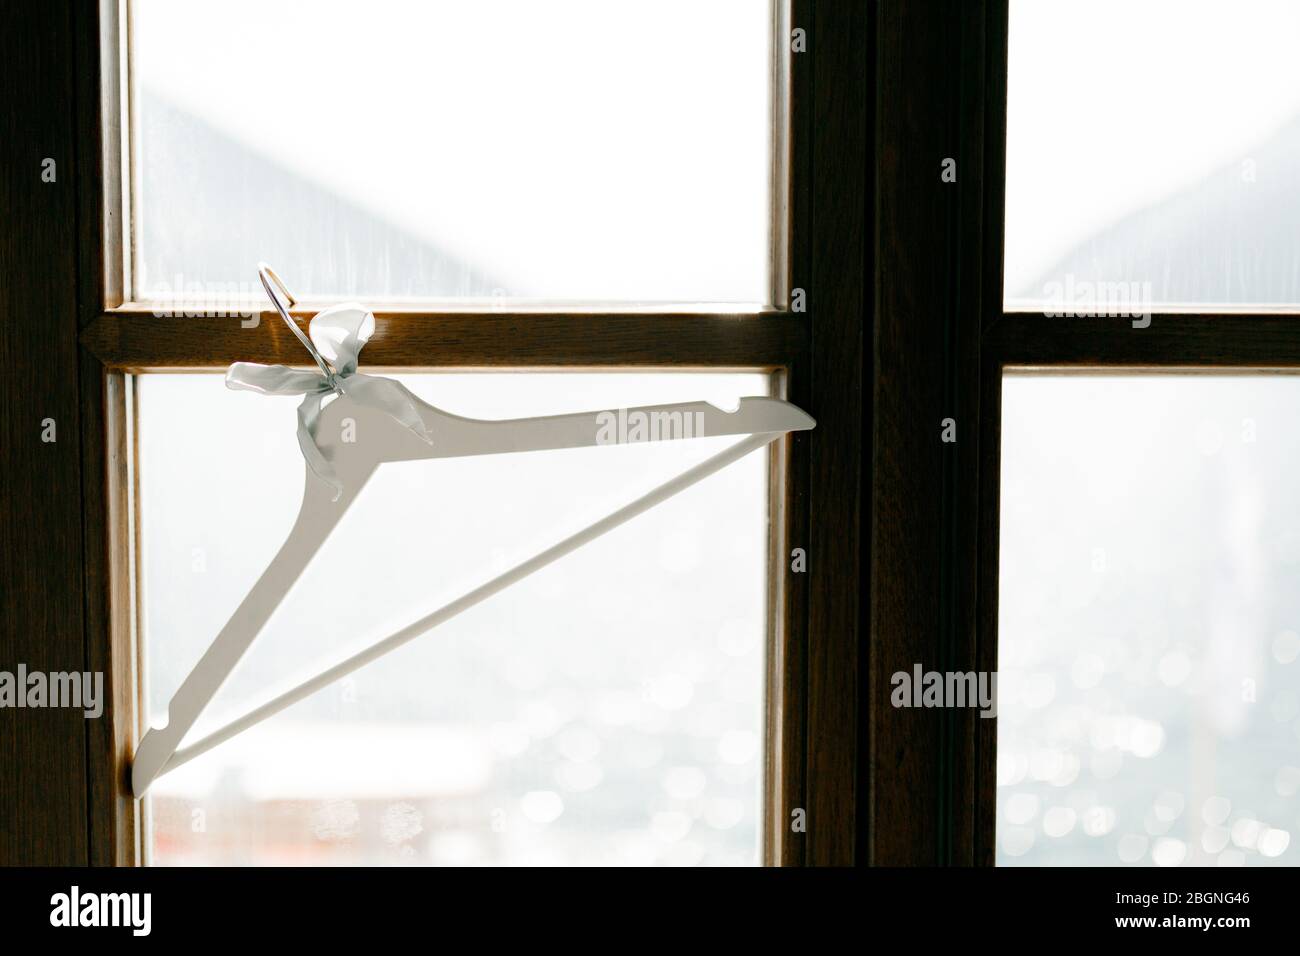 A white coat hanger hangs on the window Stock Photo